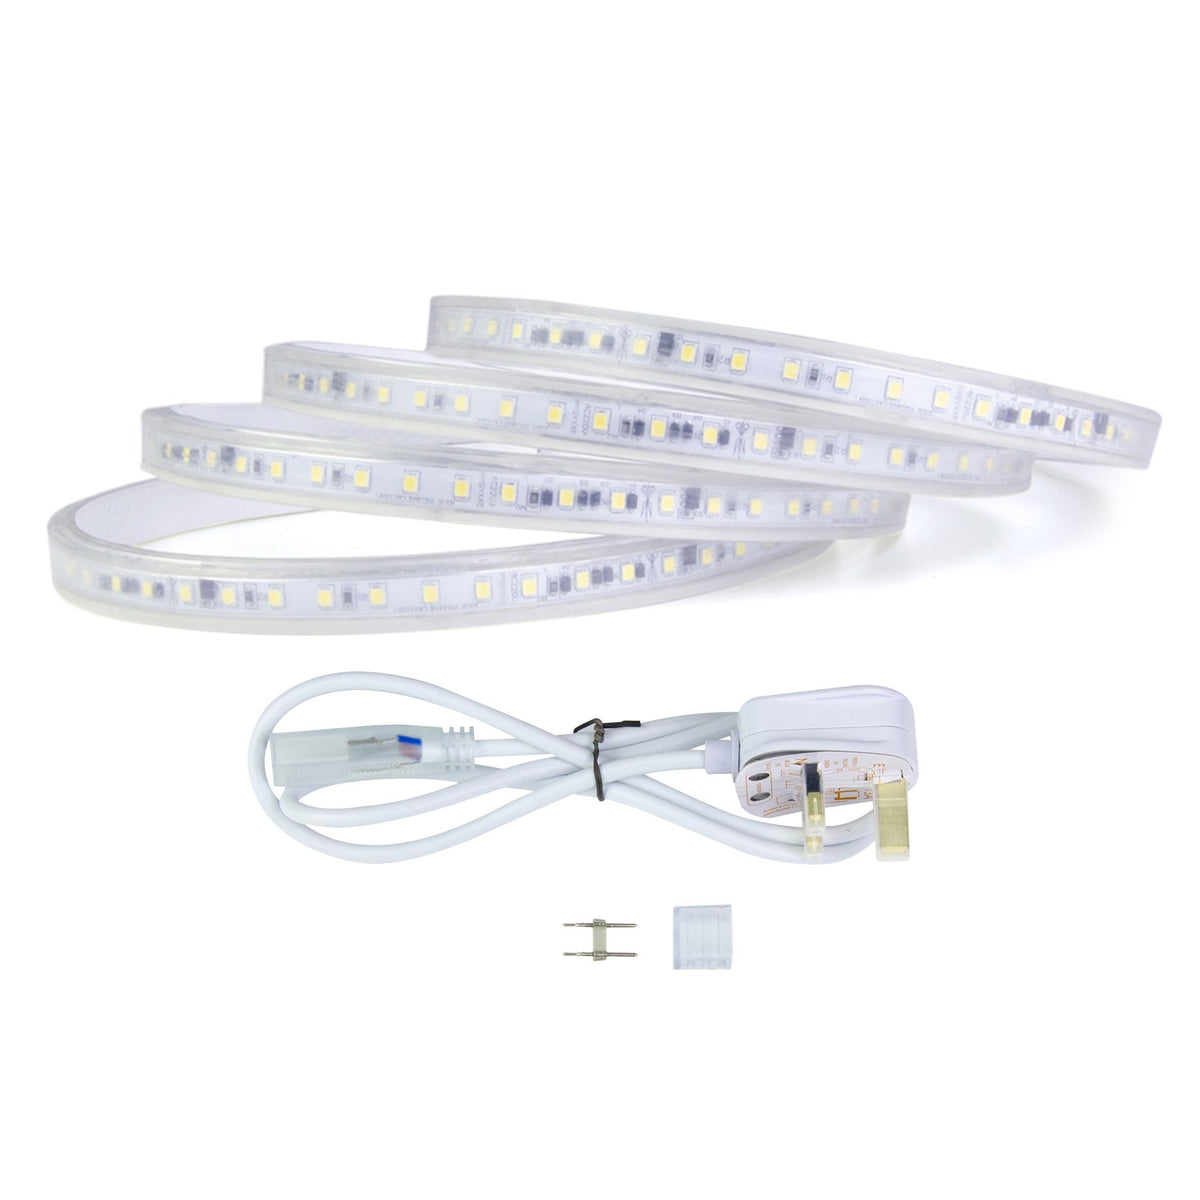 G.W.S LED Wholesale Ltd. LED Strip Lights 1M Warm White Strip With Plug Set / IP65 (Weatherproof) 220V IP65 2835 LED Strip Light